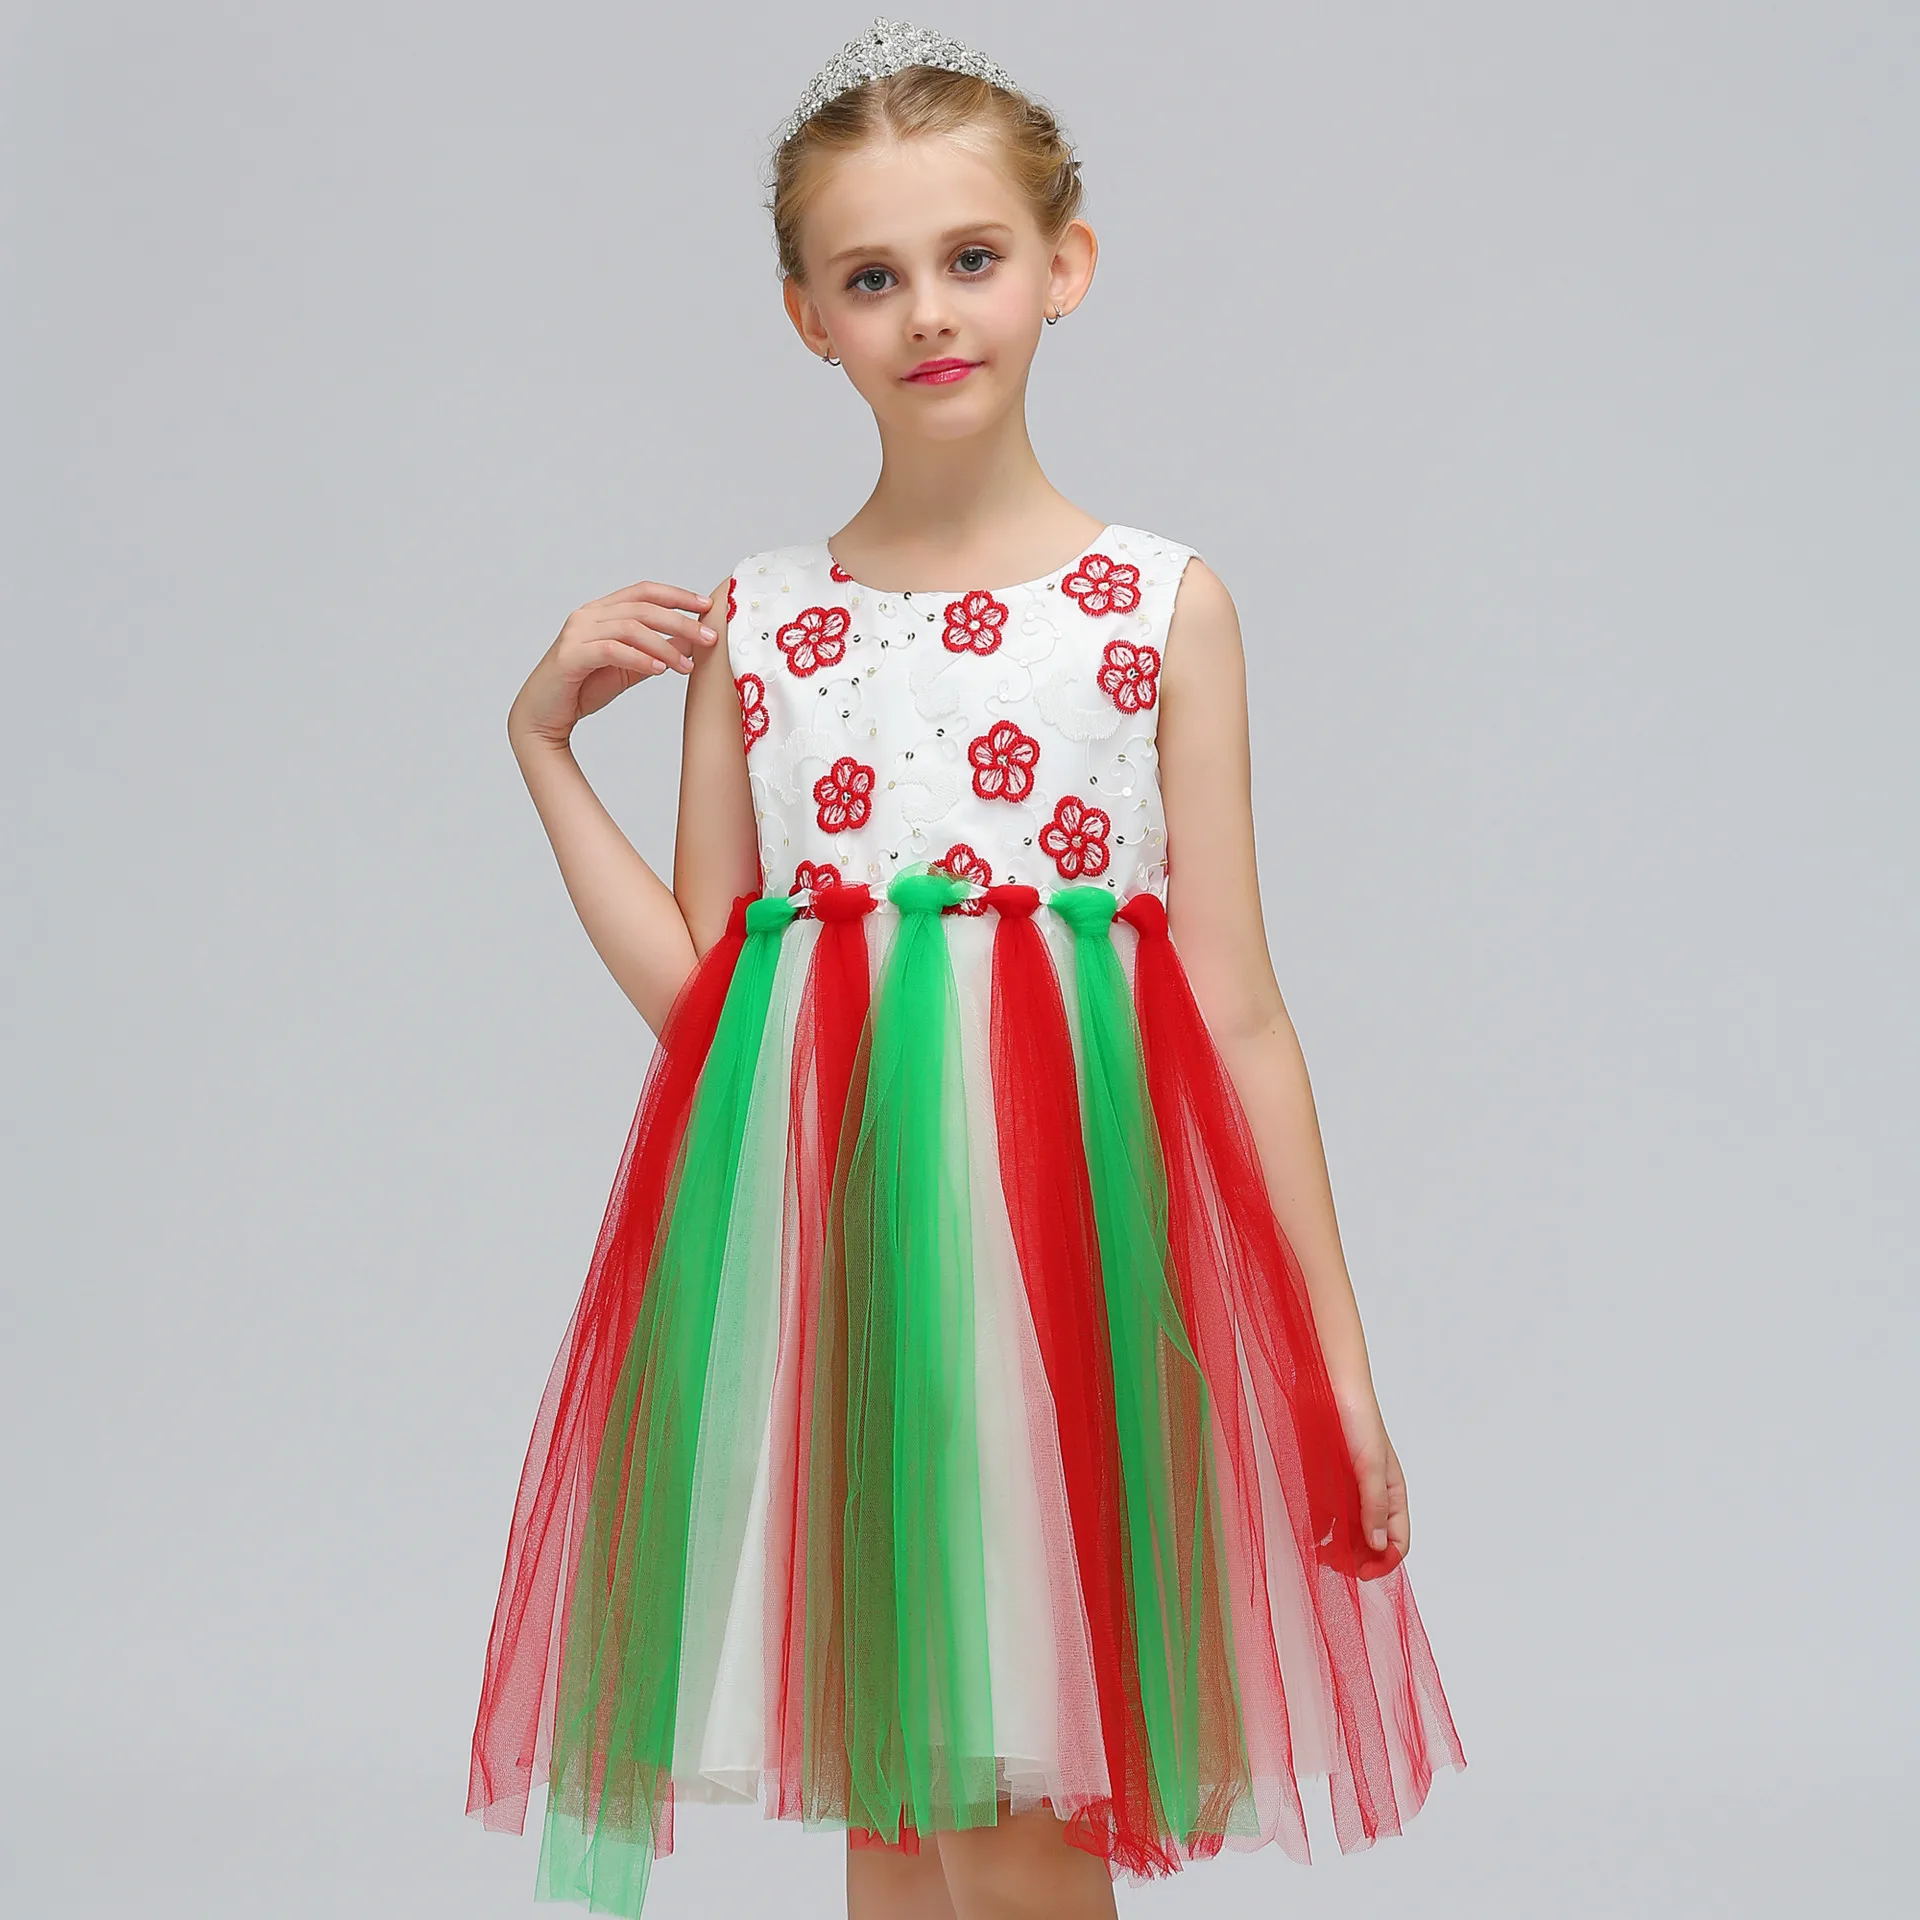 Girl Rainbow Dress Children Princess Flower Dresses for Wedding Party Kids Evening Ball Gowns with Multicolor Tassel | Детская одежда и